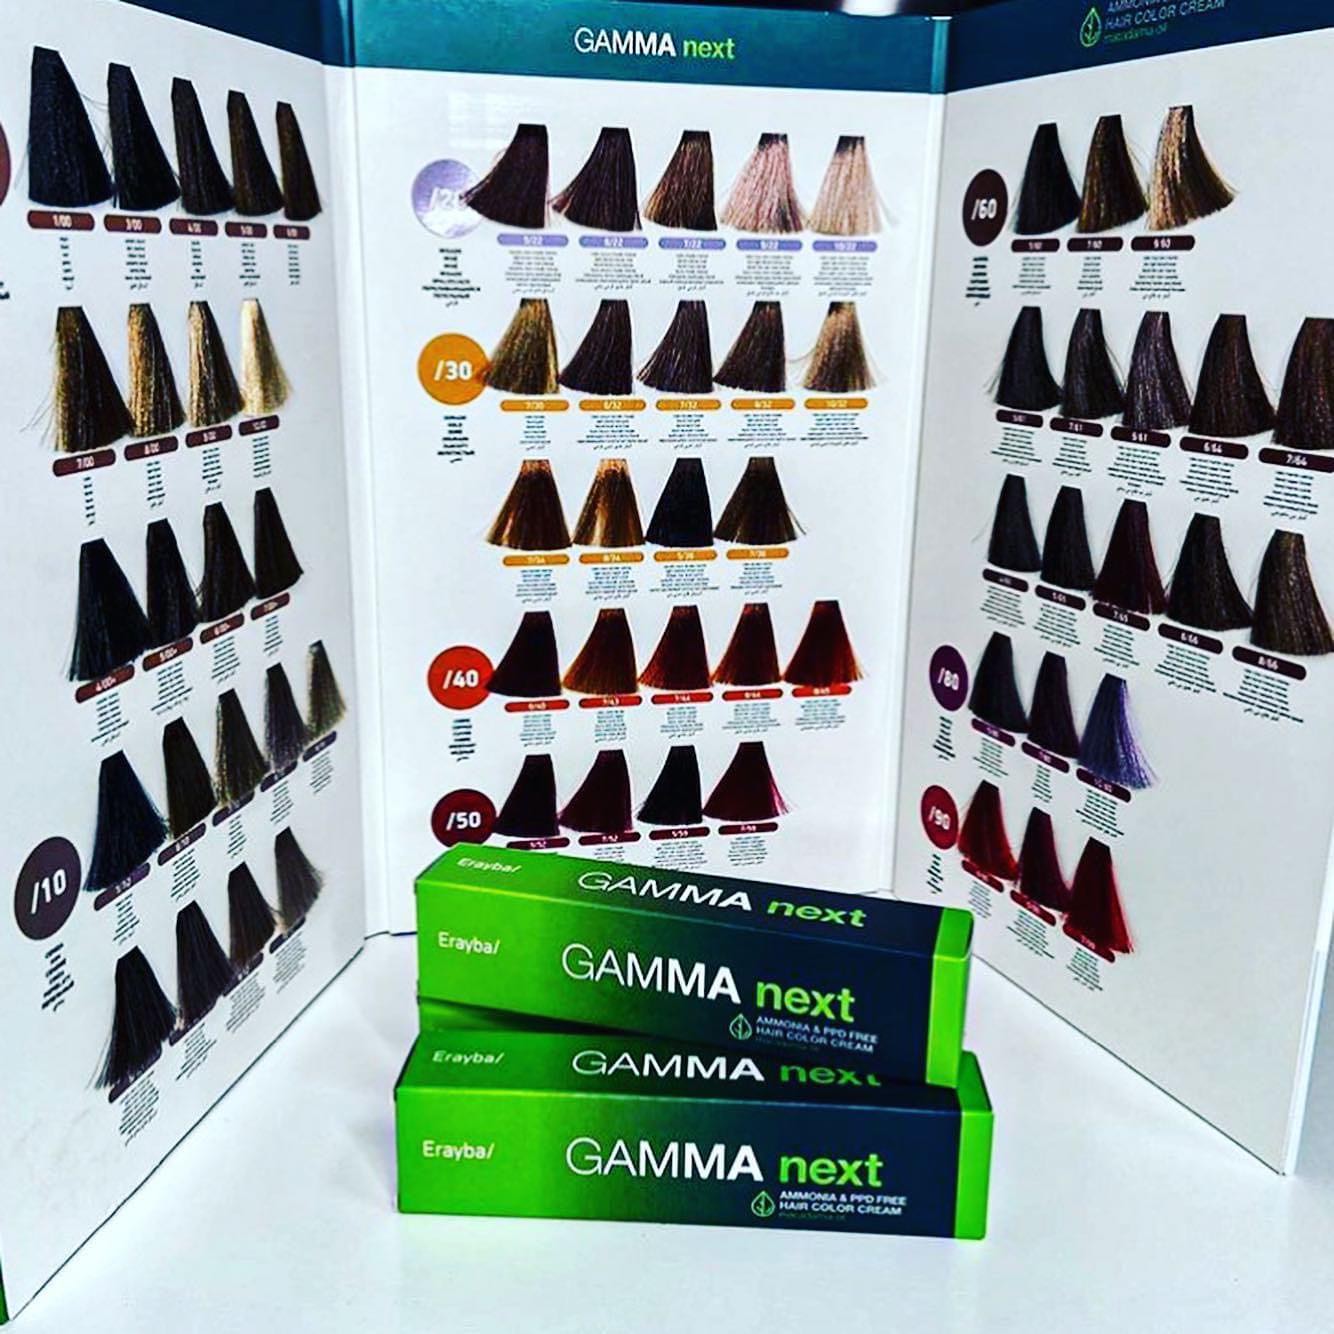 Gamma NEXT Ammonia & PPD Free Hair Color Cream - 9/12 Very Light Blond Irise Ash